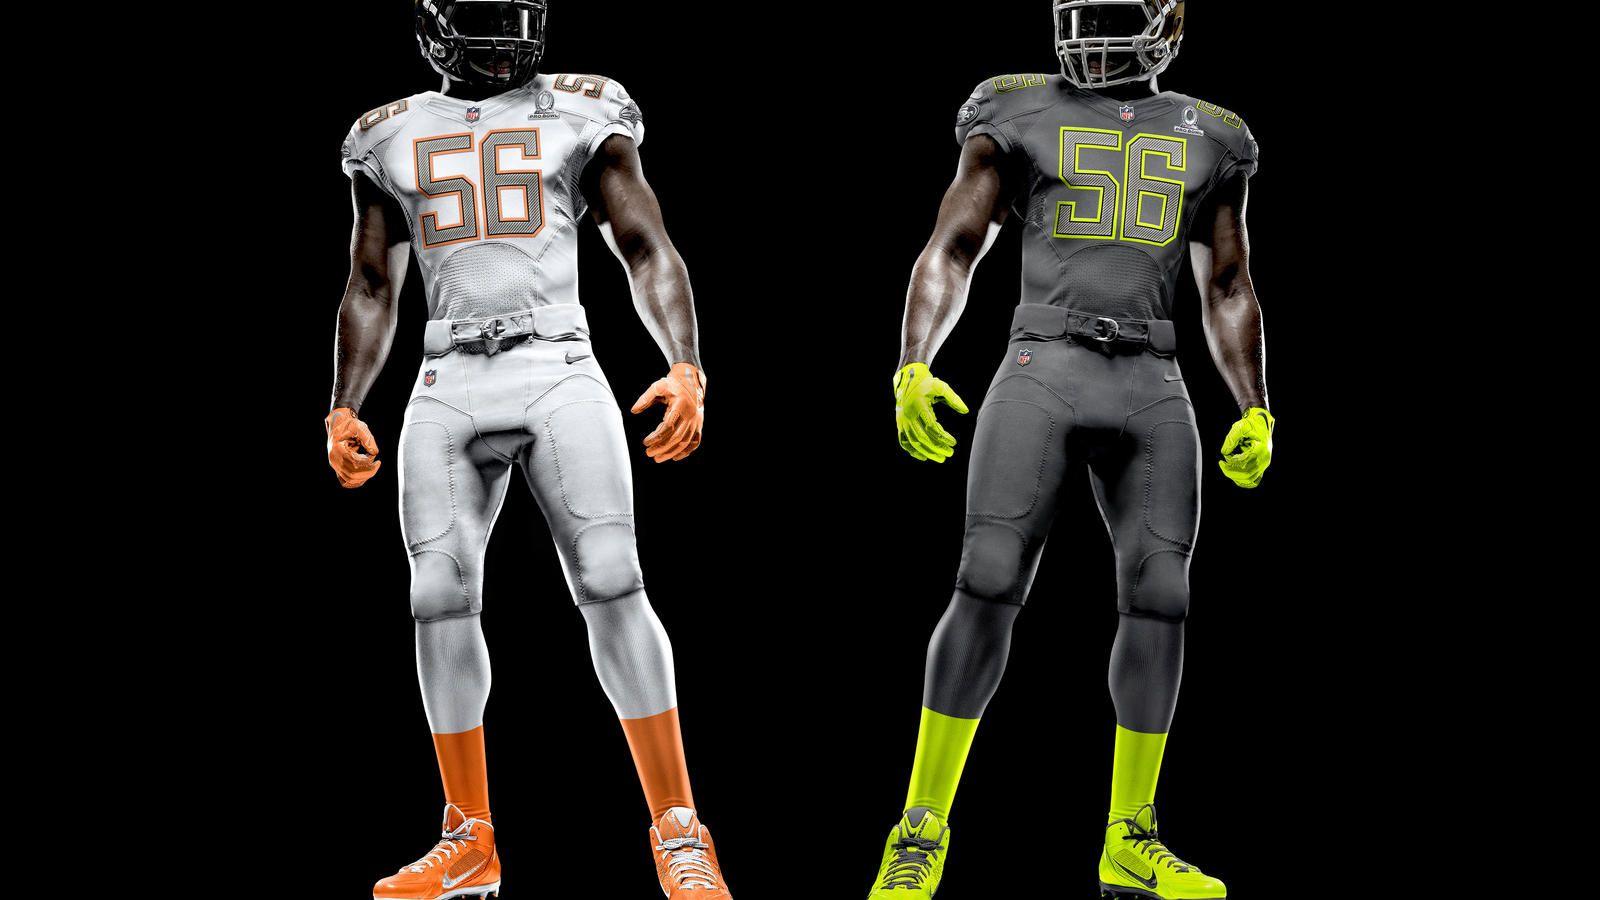 NFL Nike Elite 51 Pro Bowl Uniforms Unveiled